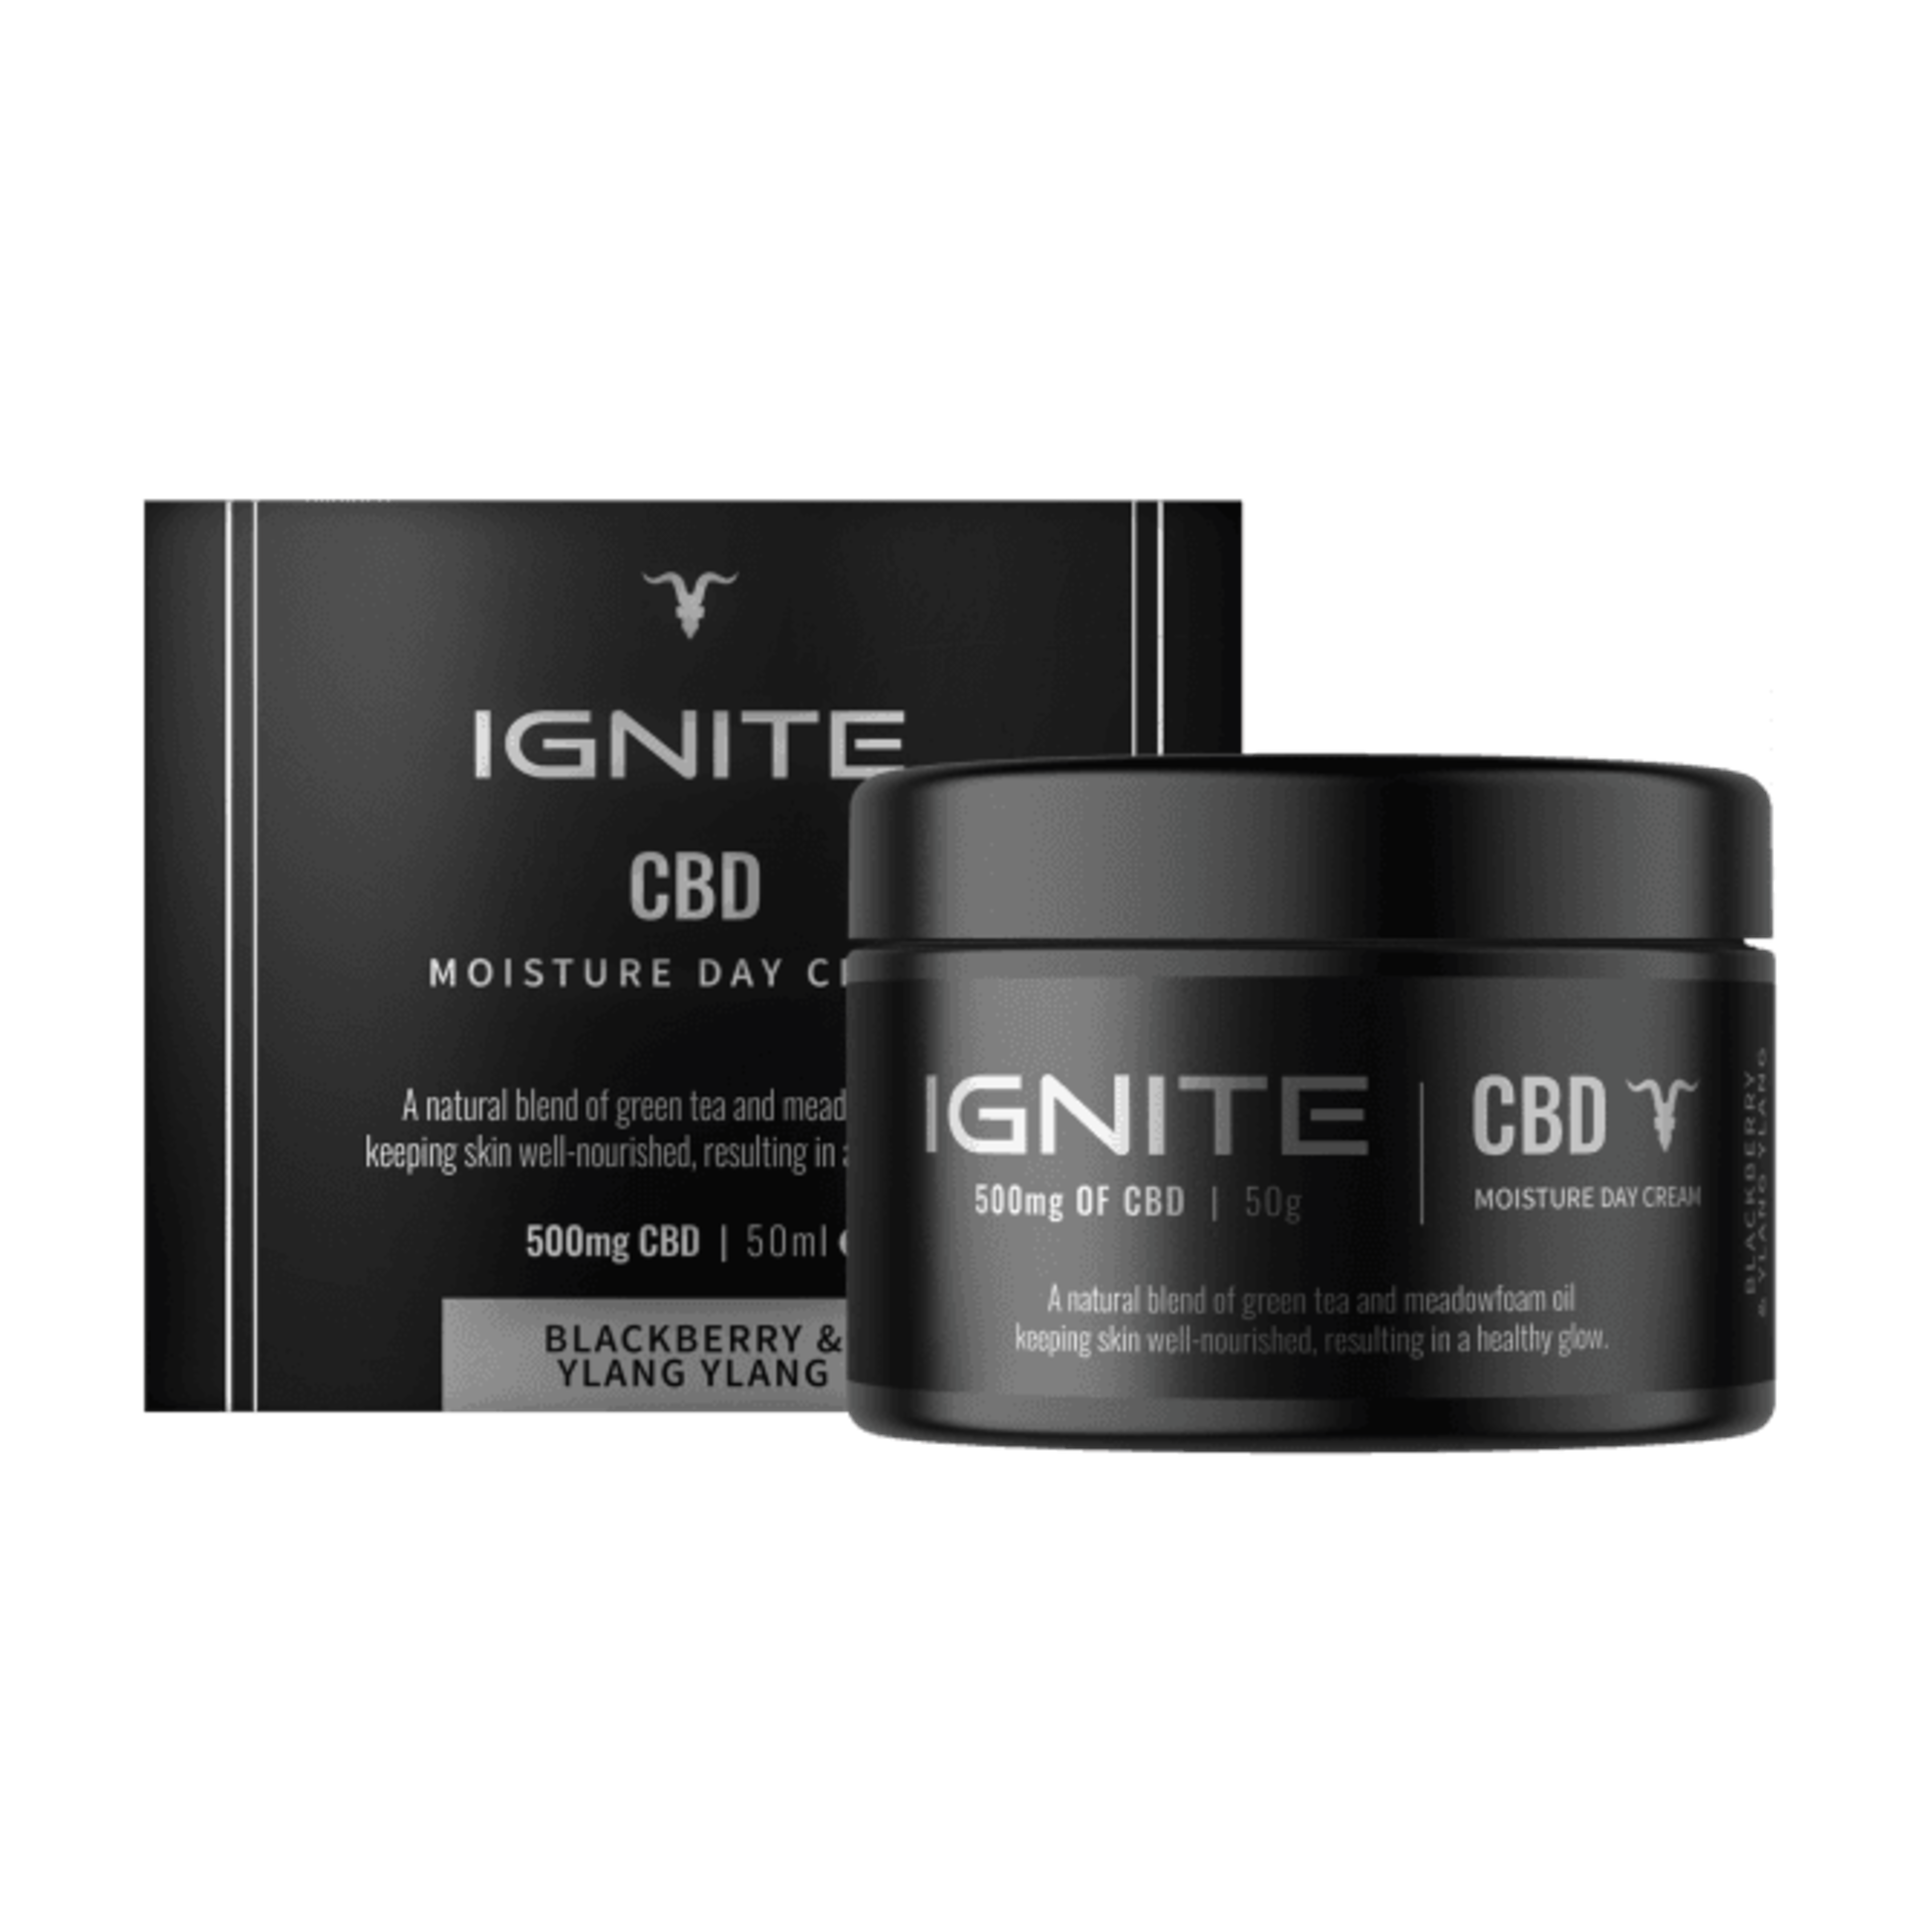 25 Brand New Bottles of CBD Ignite Skin Care - See Description for Product list - Image 2 of 5